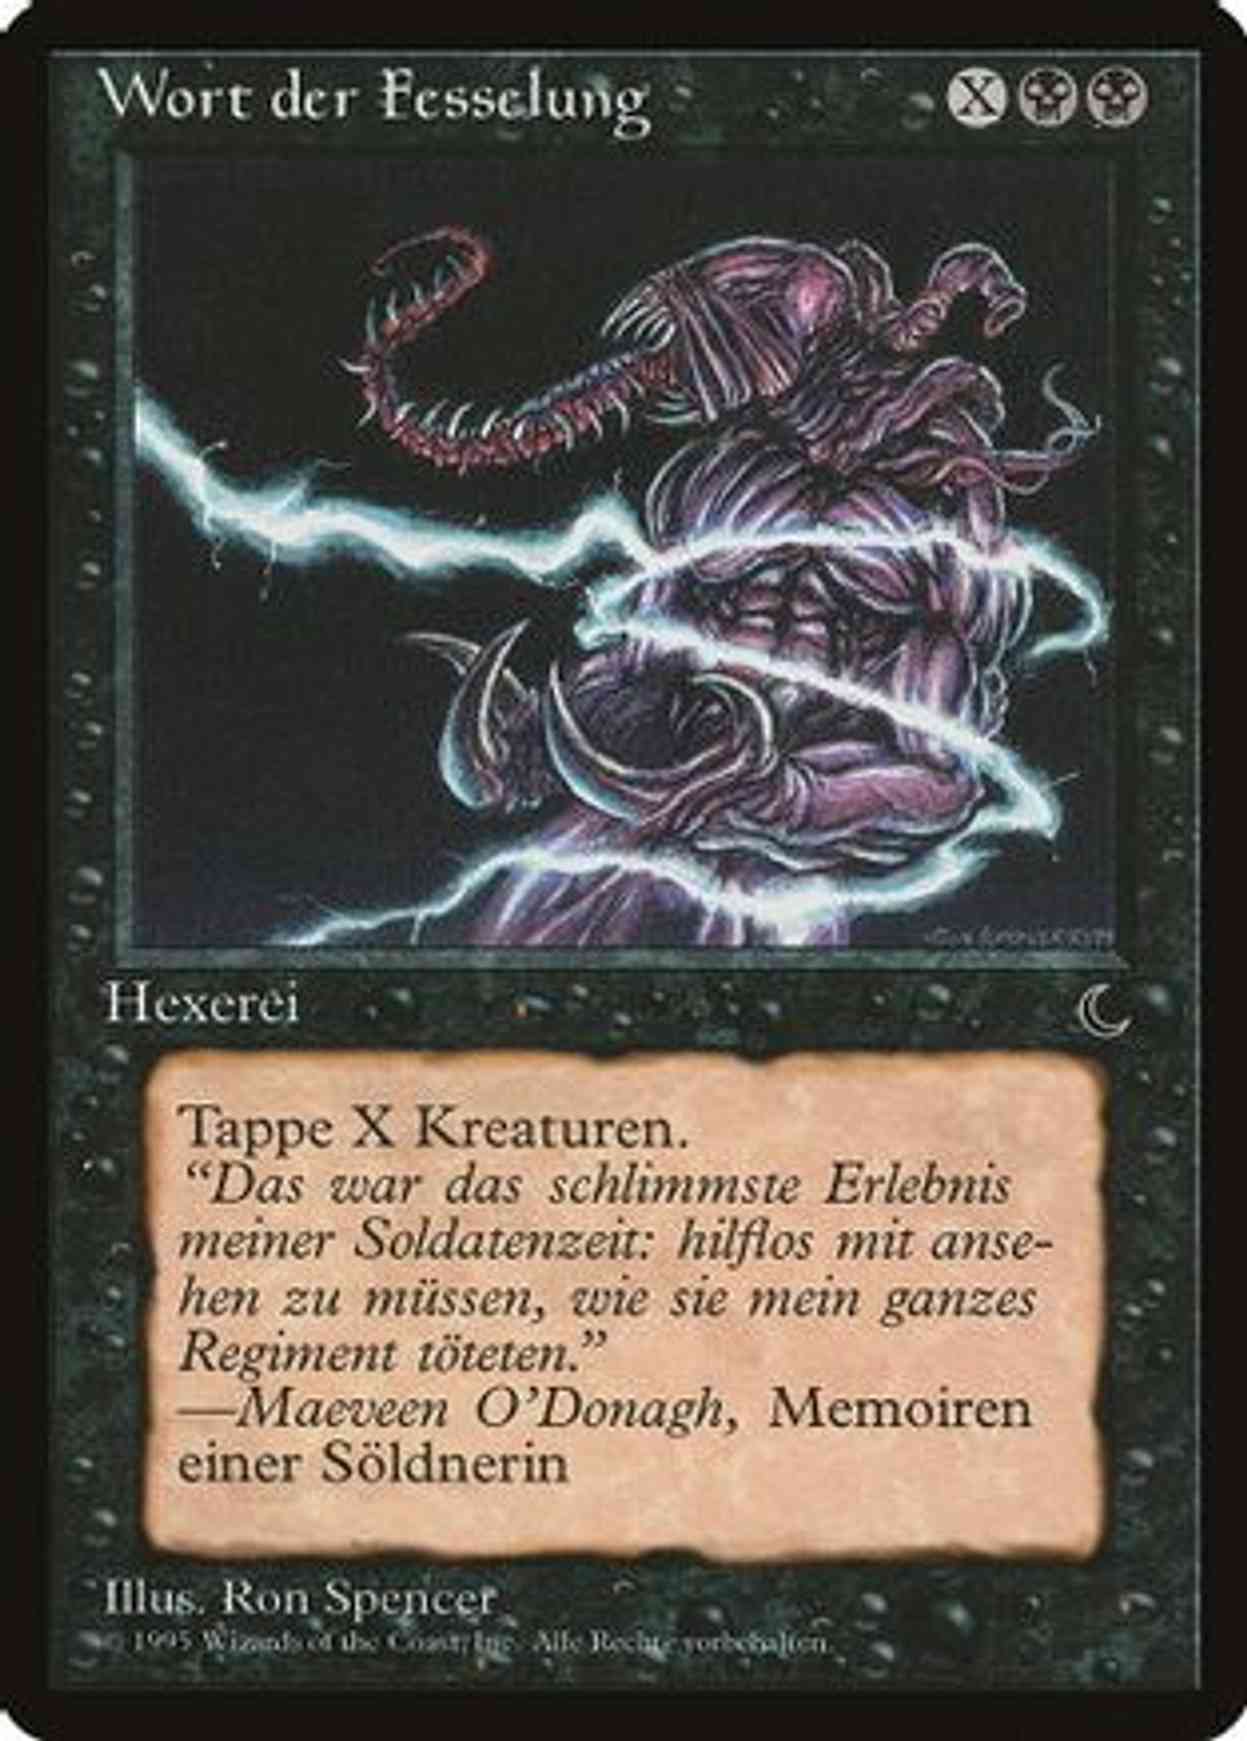 Word of Binding (German) - "Wort der Fesselung" magic card front